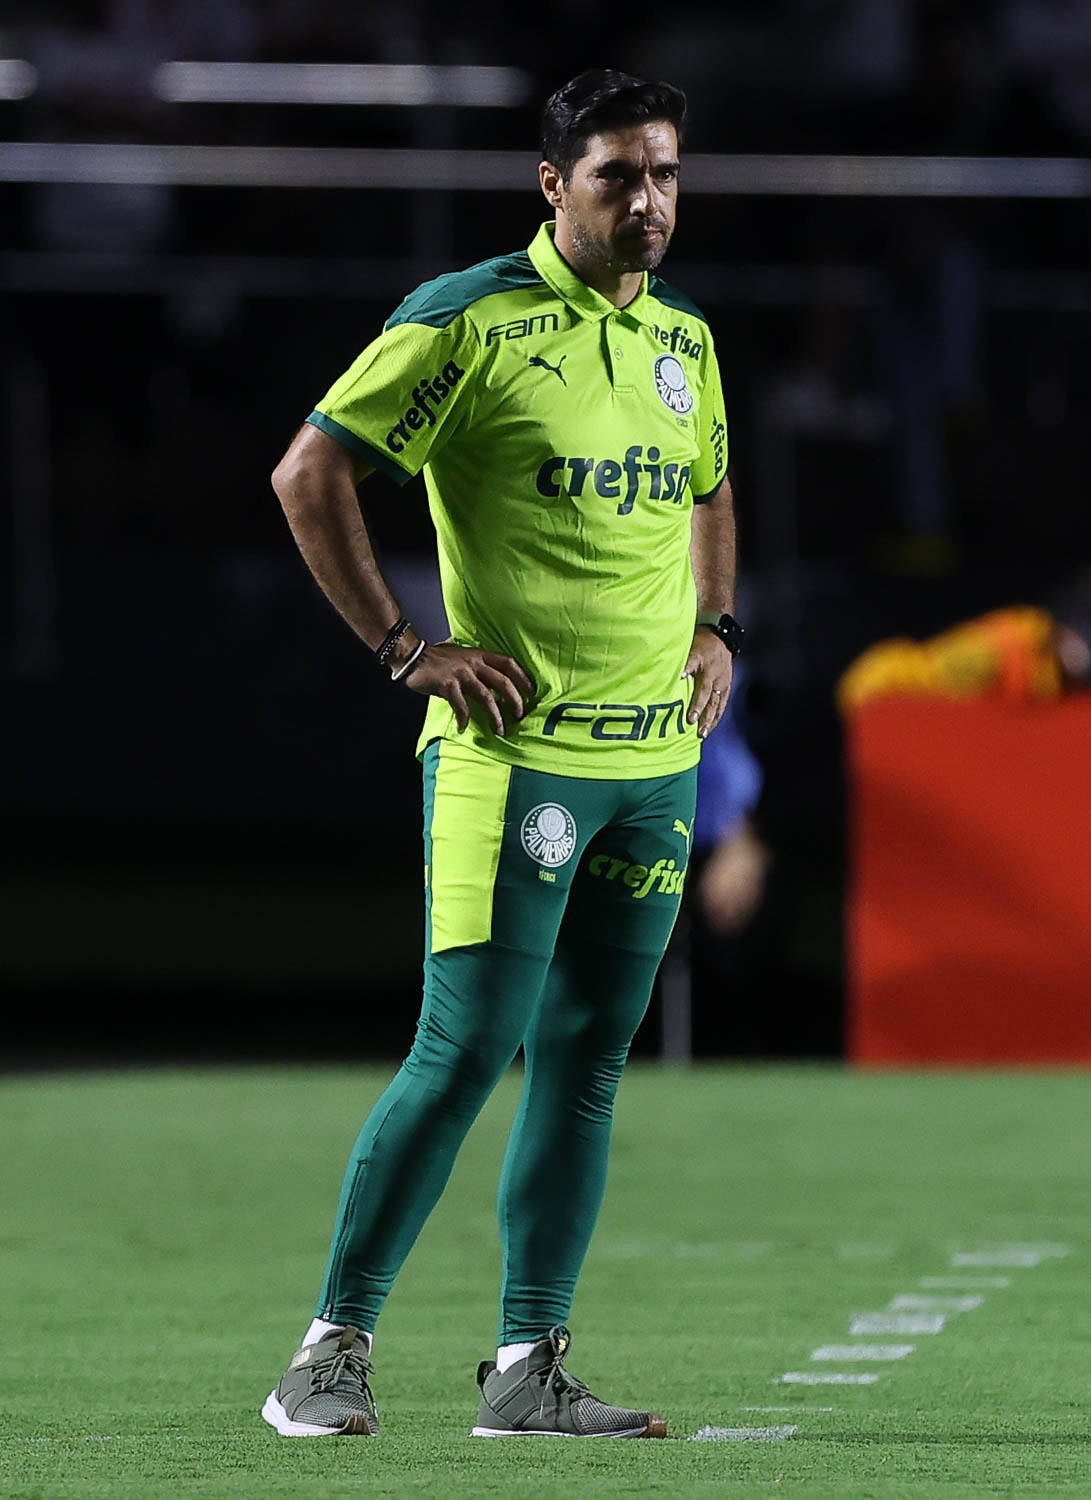 Foto: Cesar Greco / Palmeiras - 10.03.2022